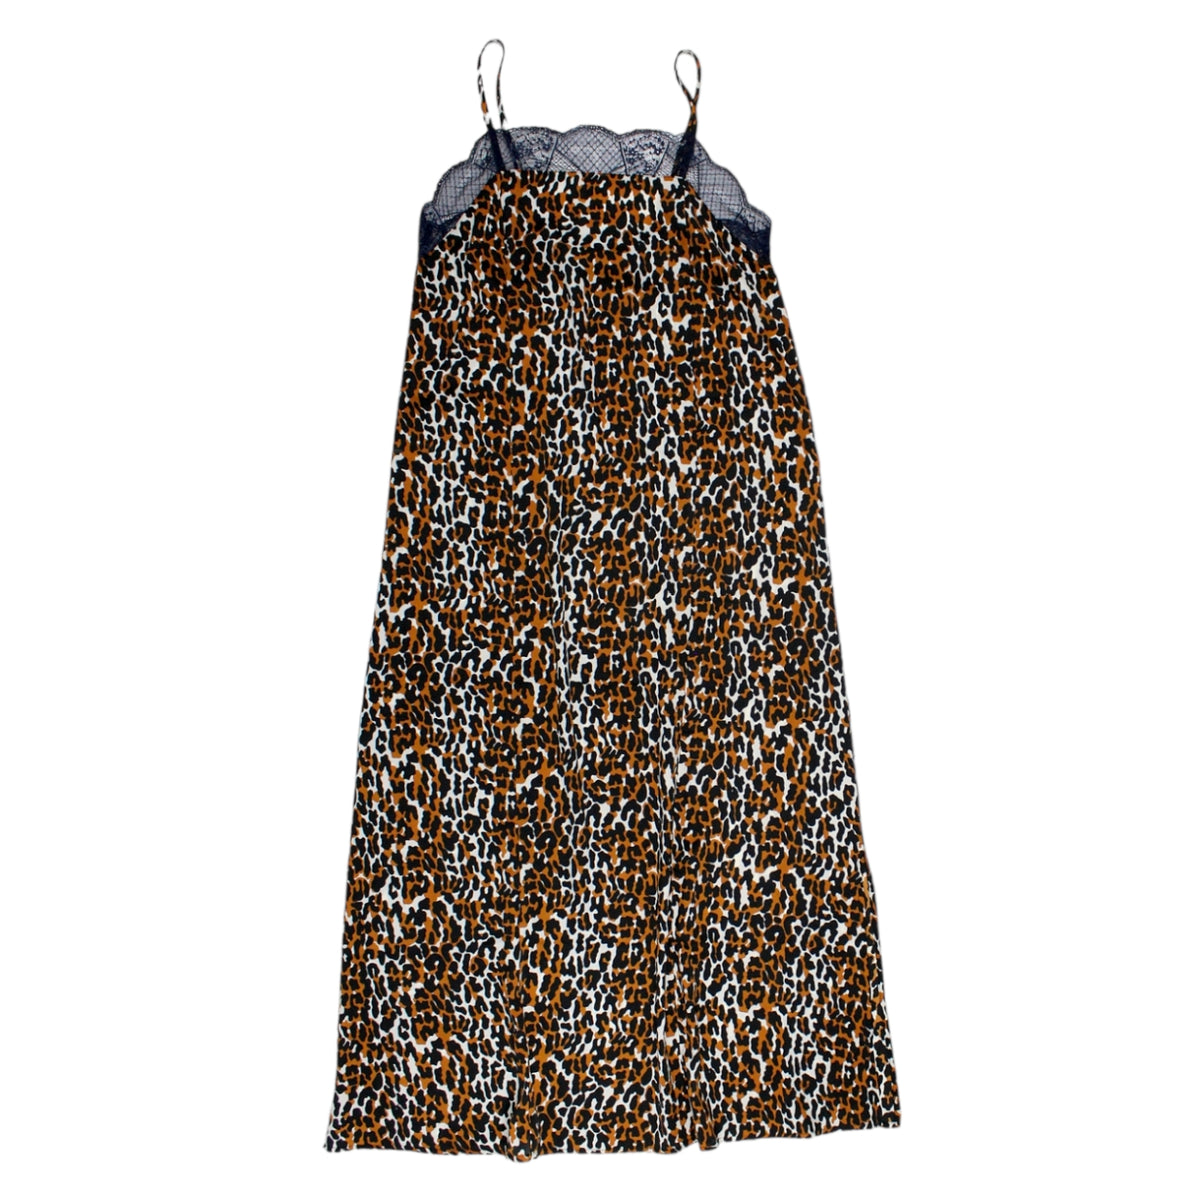 Hush Cream Leopard Lace Trim Slip Dress